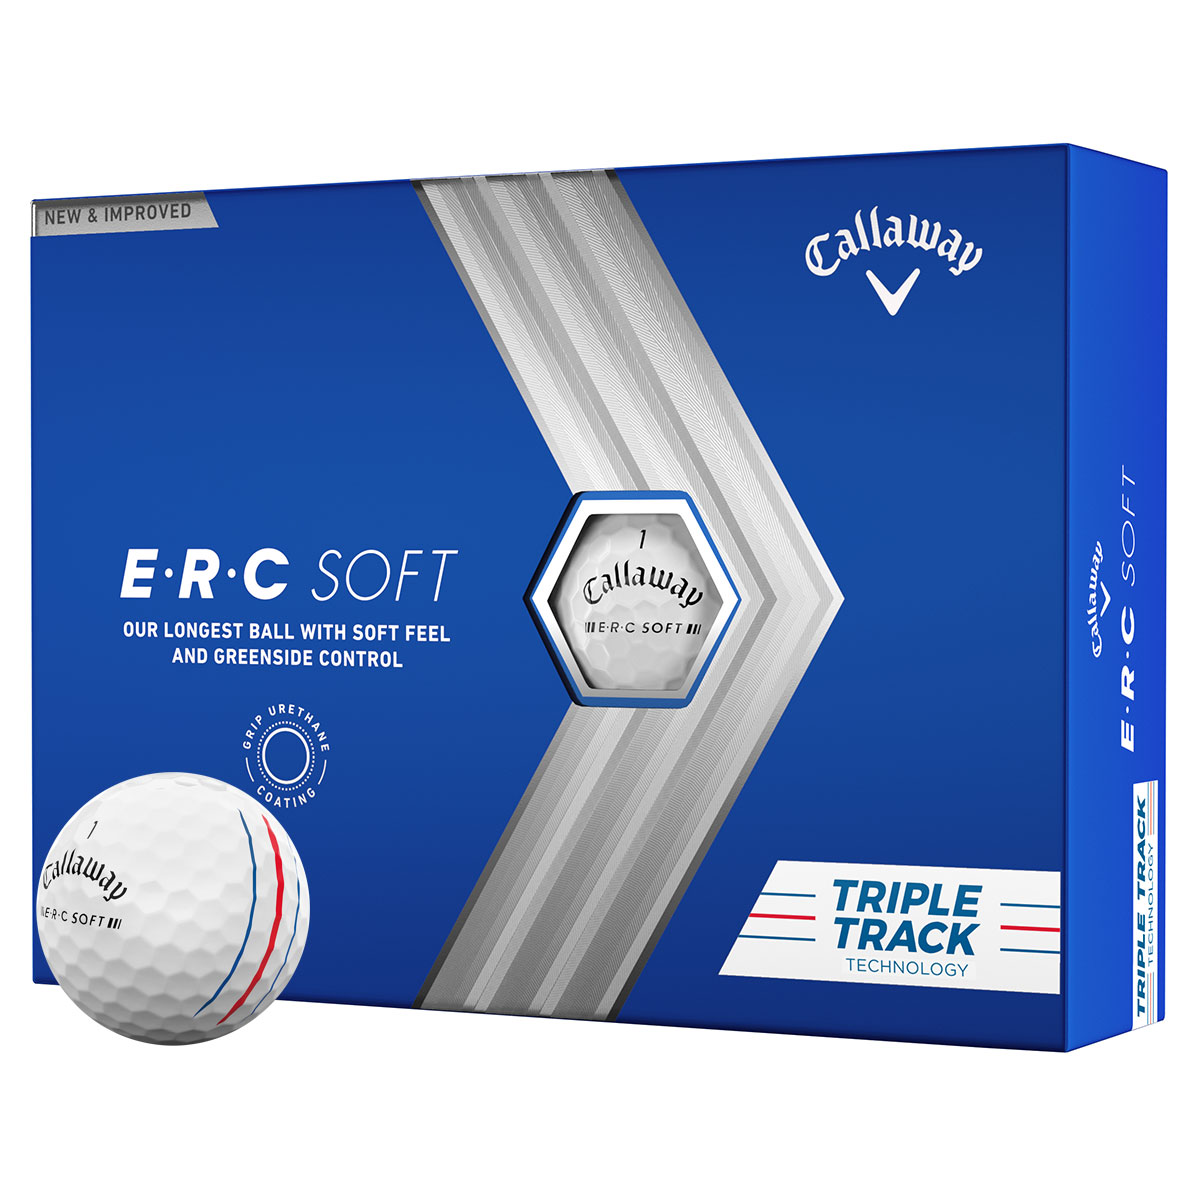 Callaway E.R.C Soft Triple Track 12 Golf Ball Pack from american golf